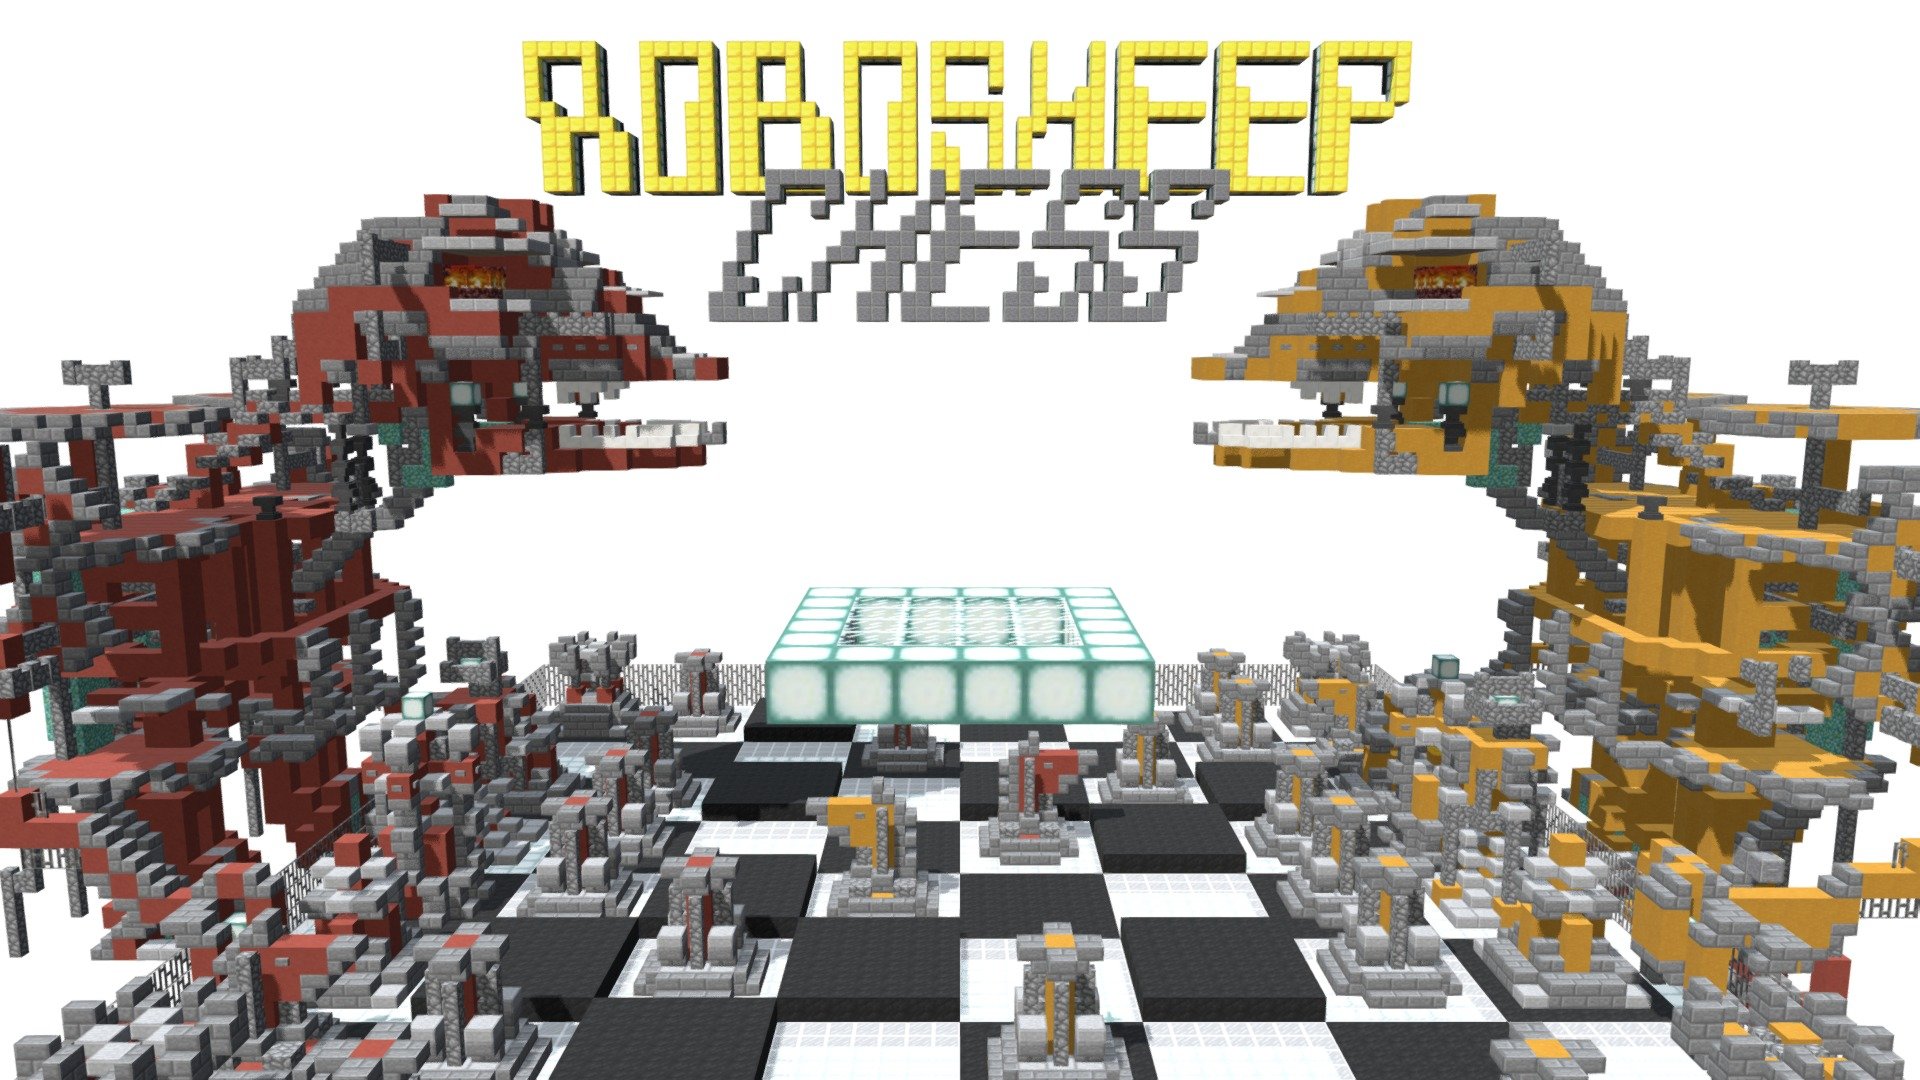 Robot Chess